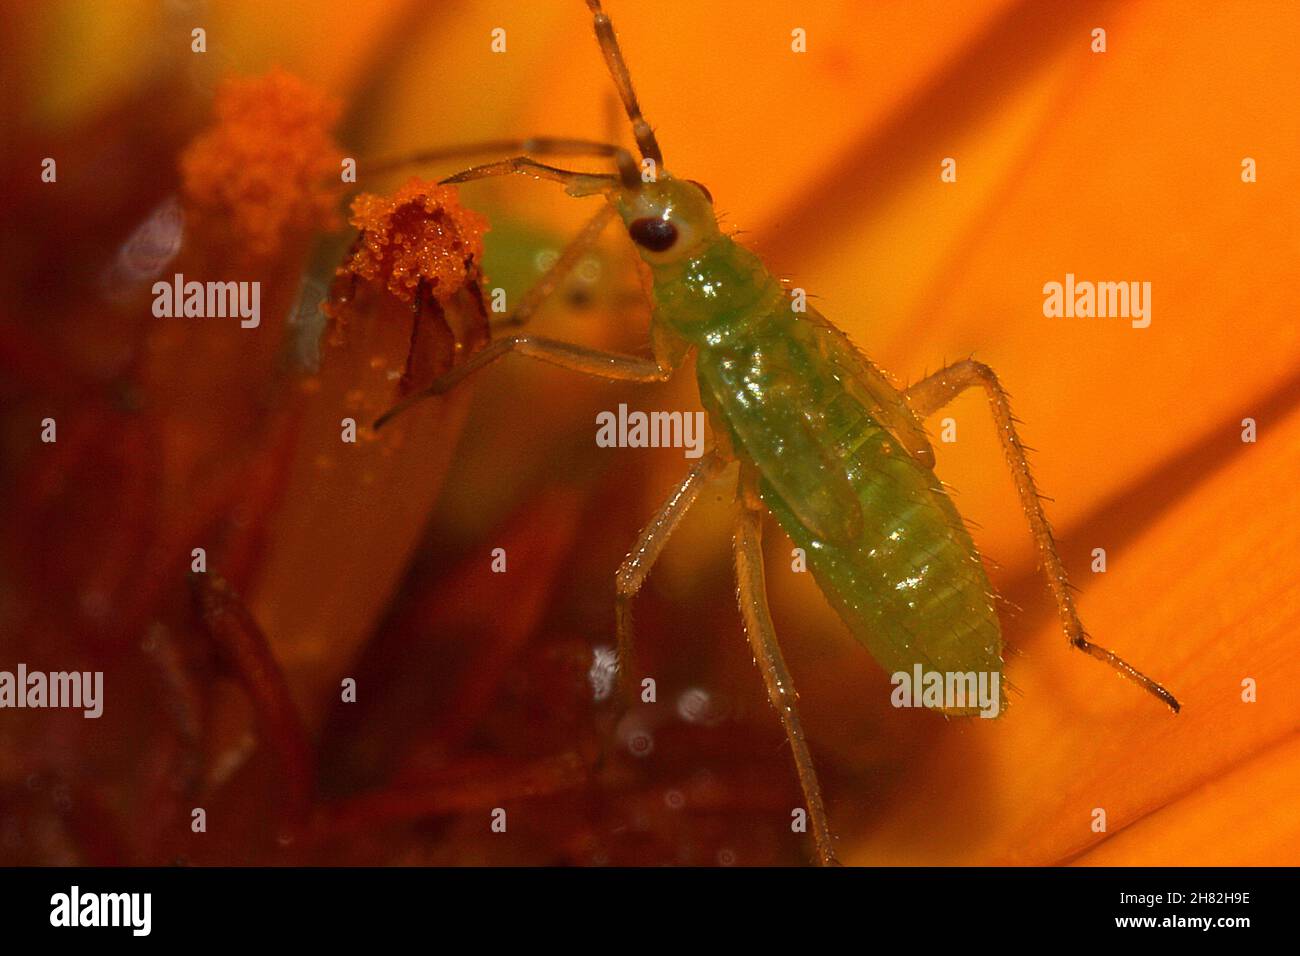 Junvenile instar sapsucking bug (Heteroptera) Stock Photo